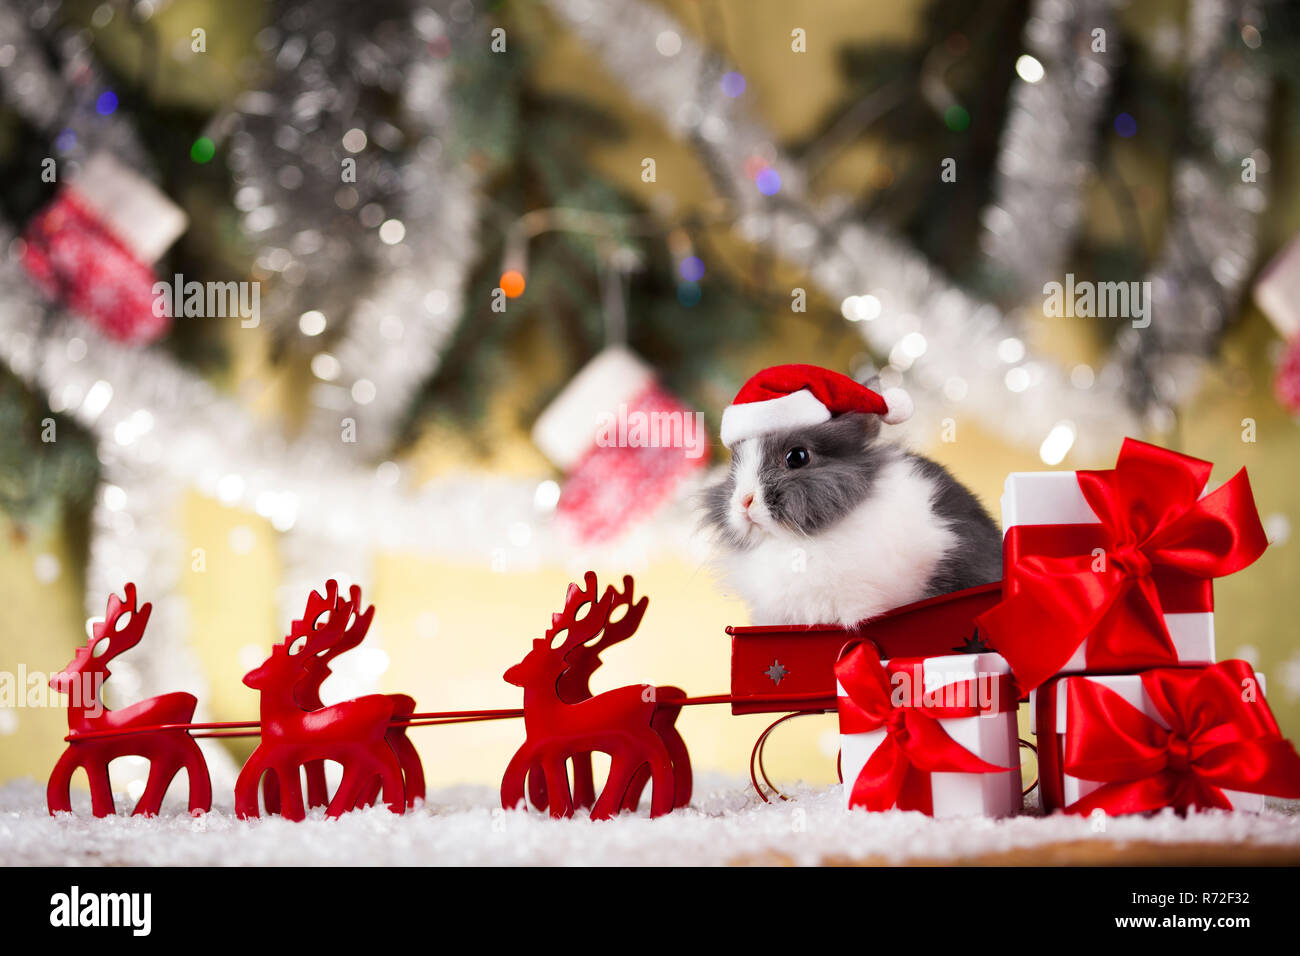 little-santa-bunny-on-christmas-background-R72F32.jpg